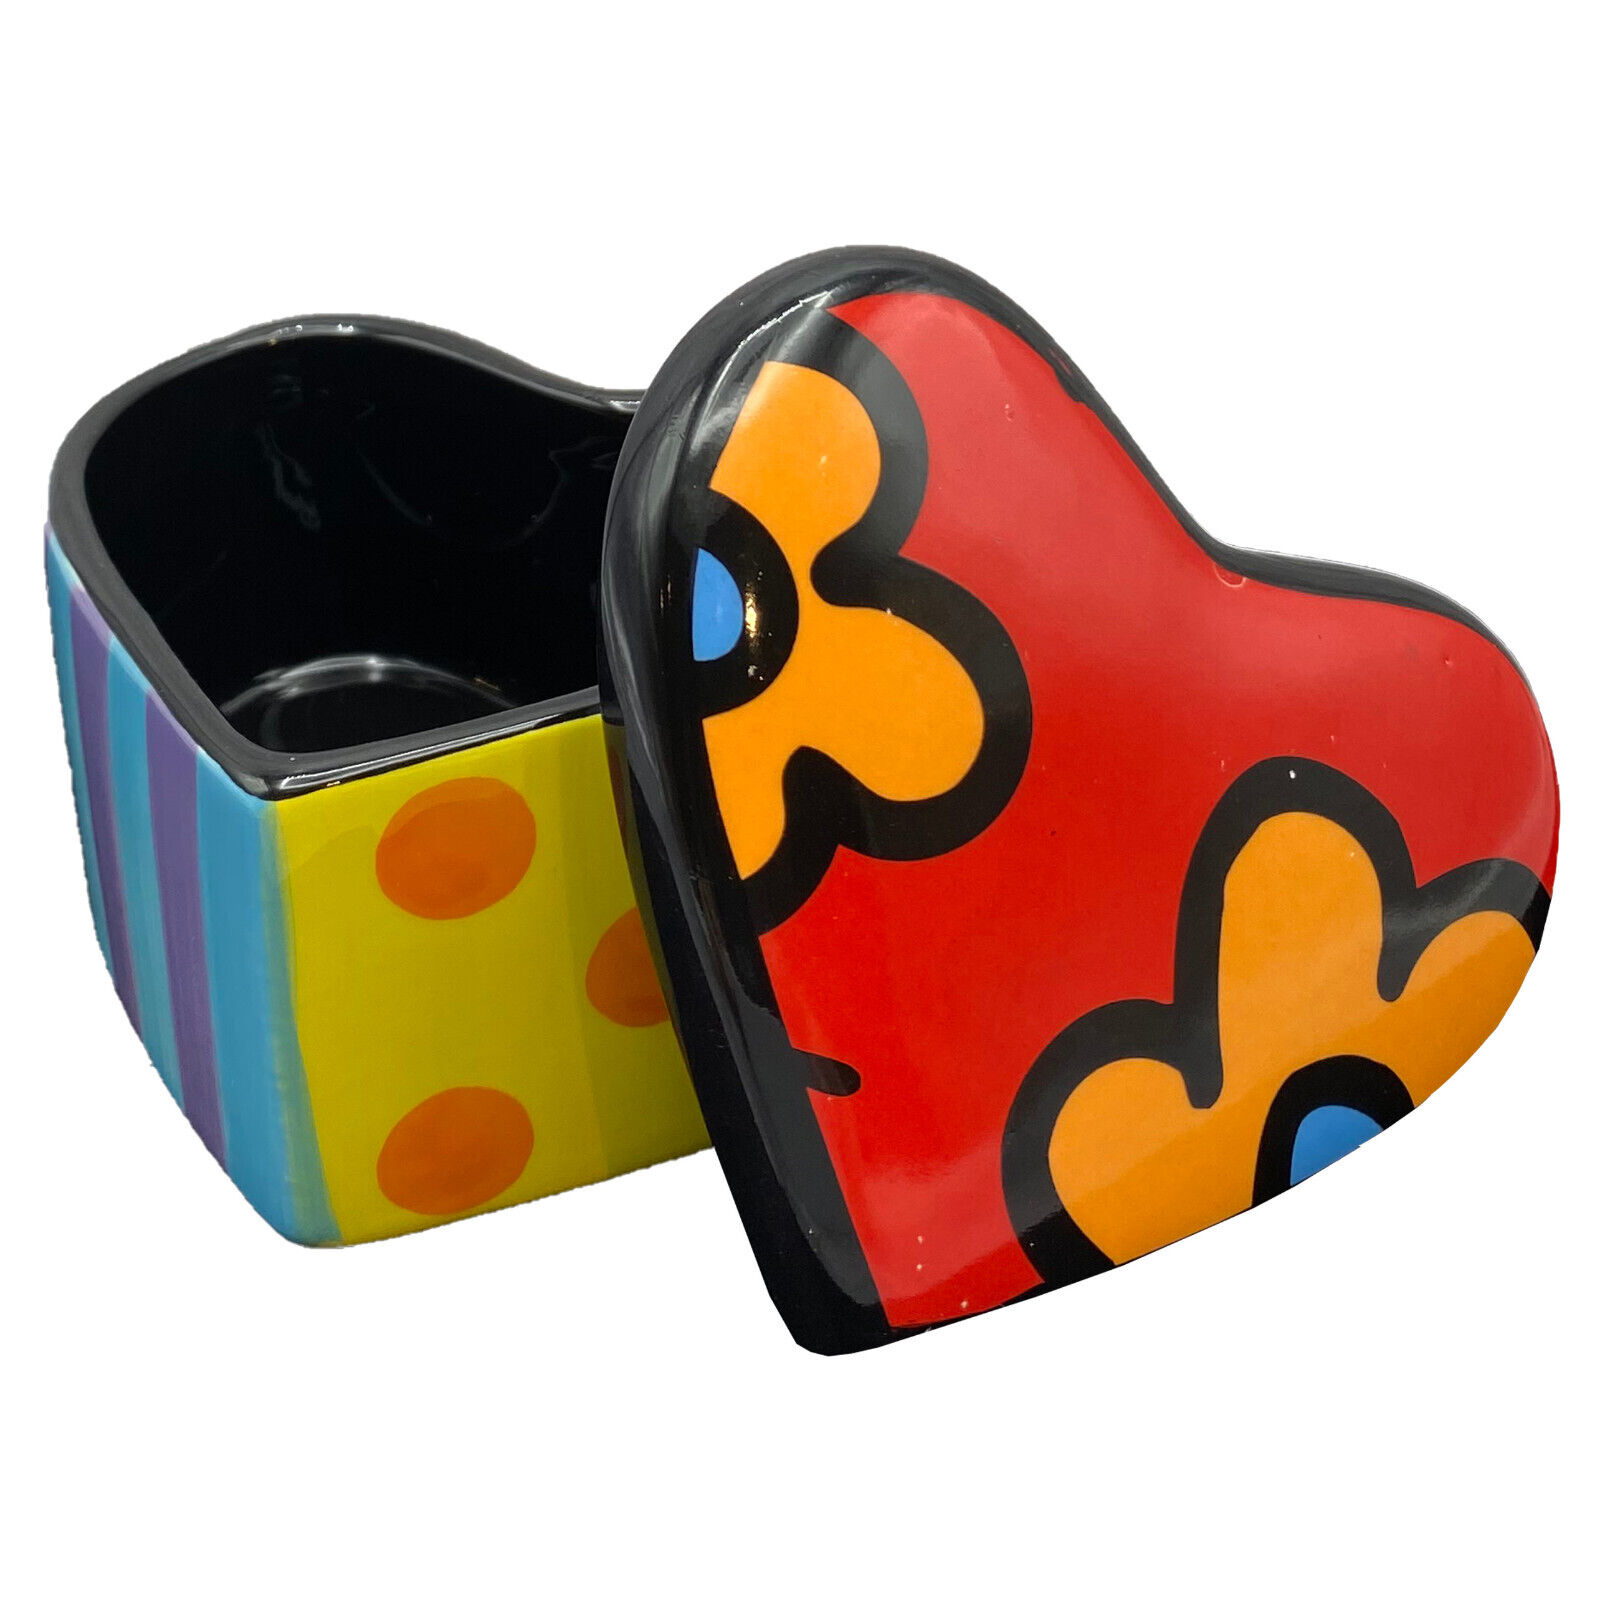 ROMERO BRITTO 2009 Colorful Heart Shaped Trinket Box - Giftcraft No. 14072